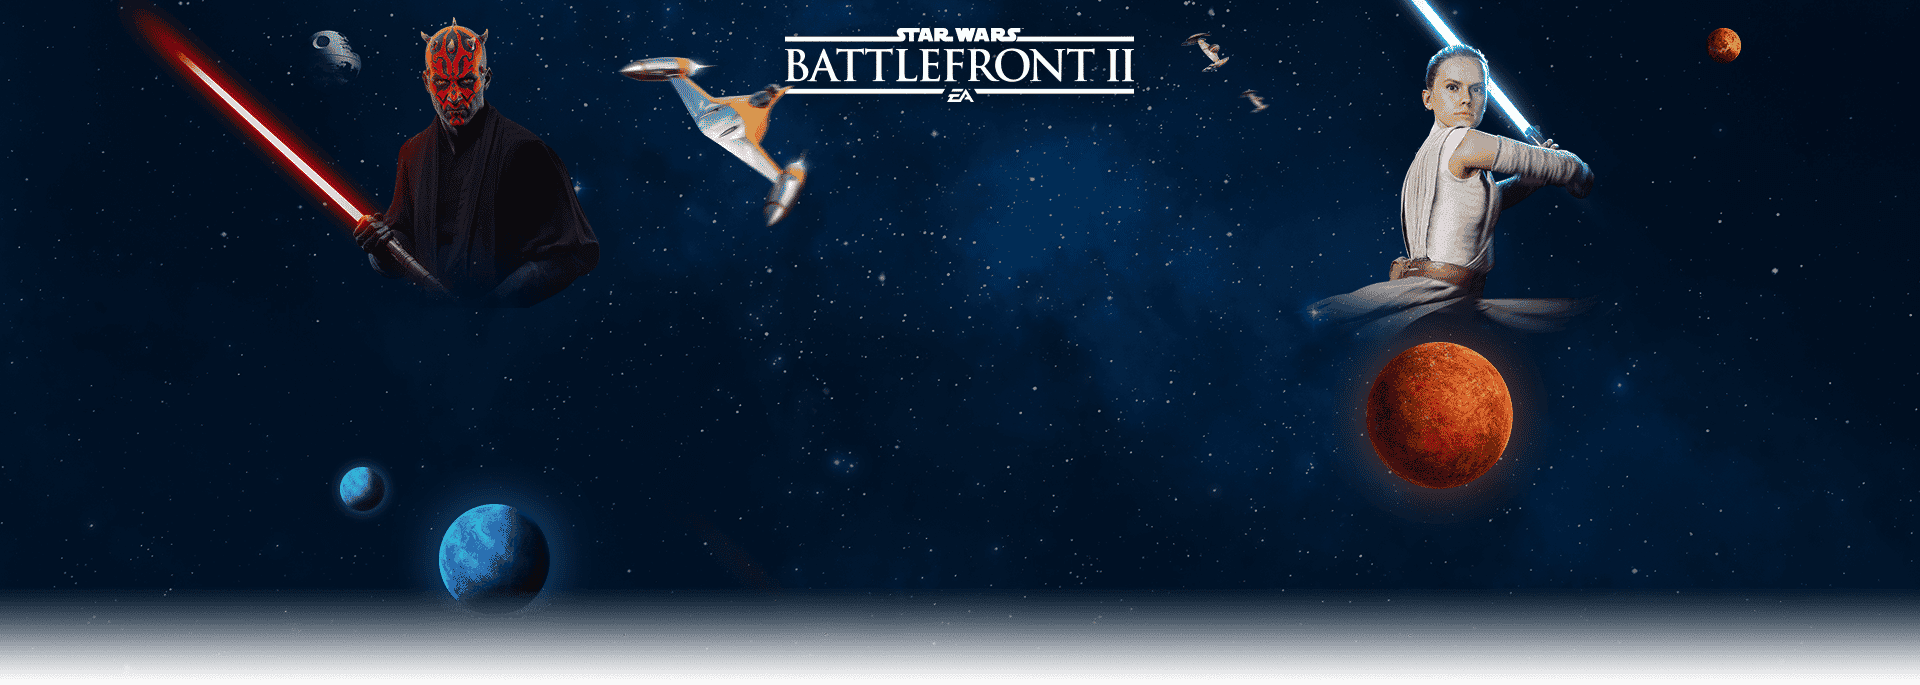 Star Wars Battlefront II - Preorder Bonuses EU Origin CD Key - background